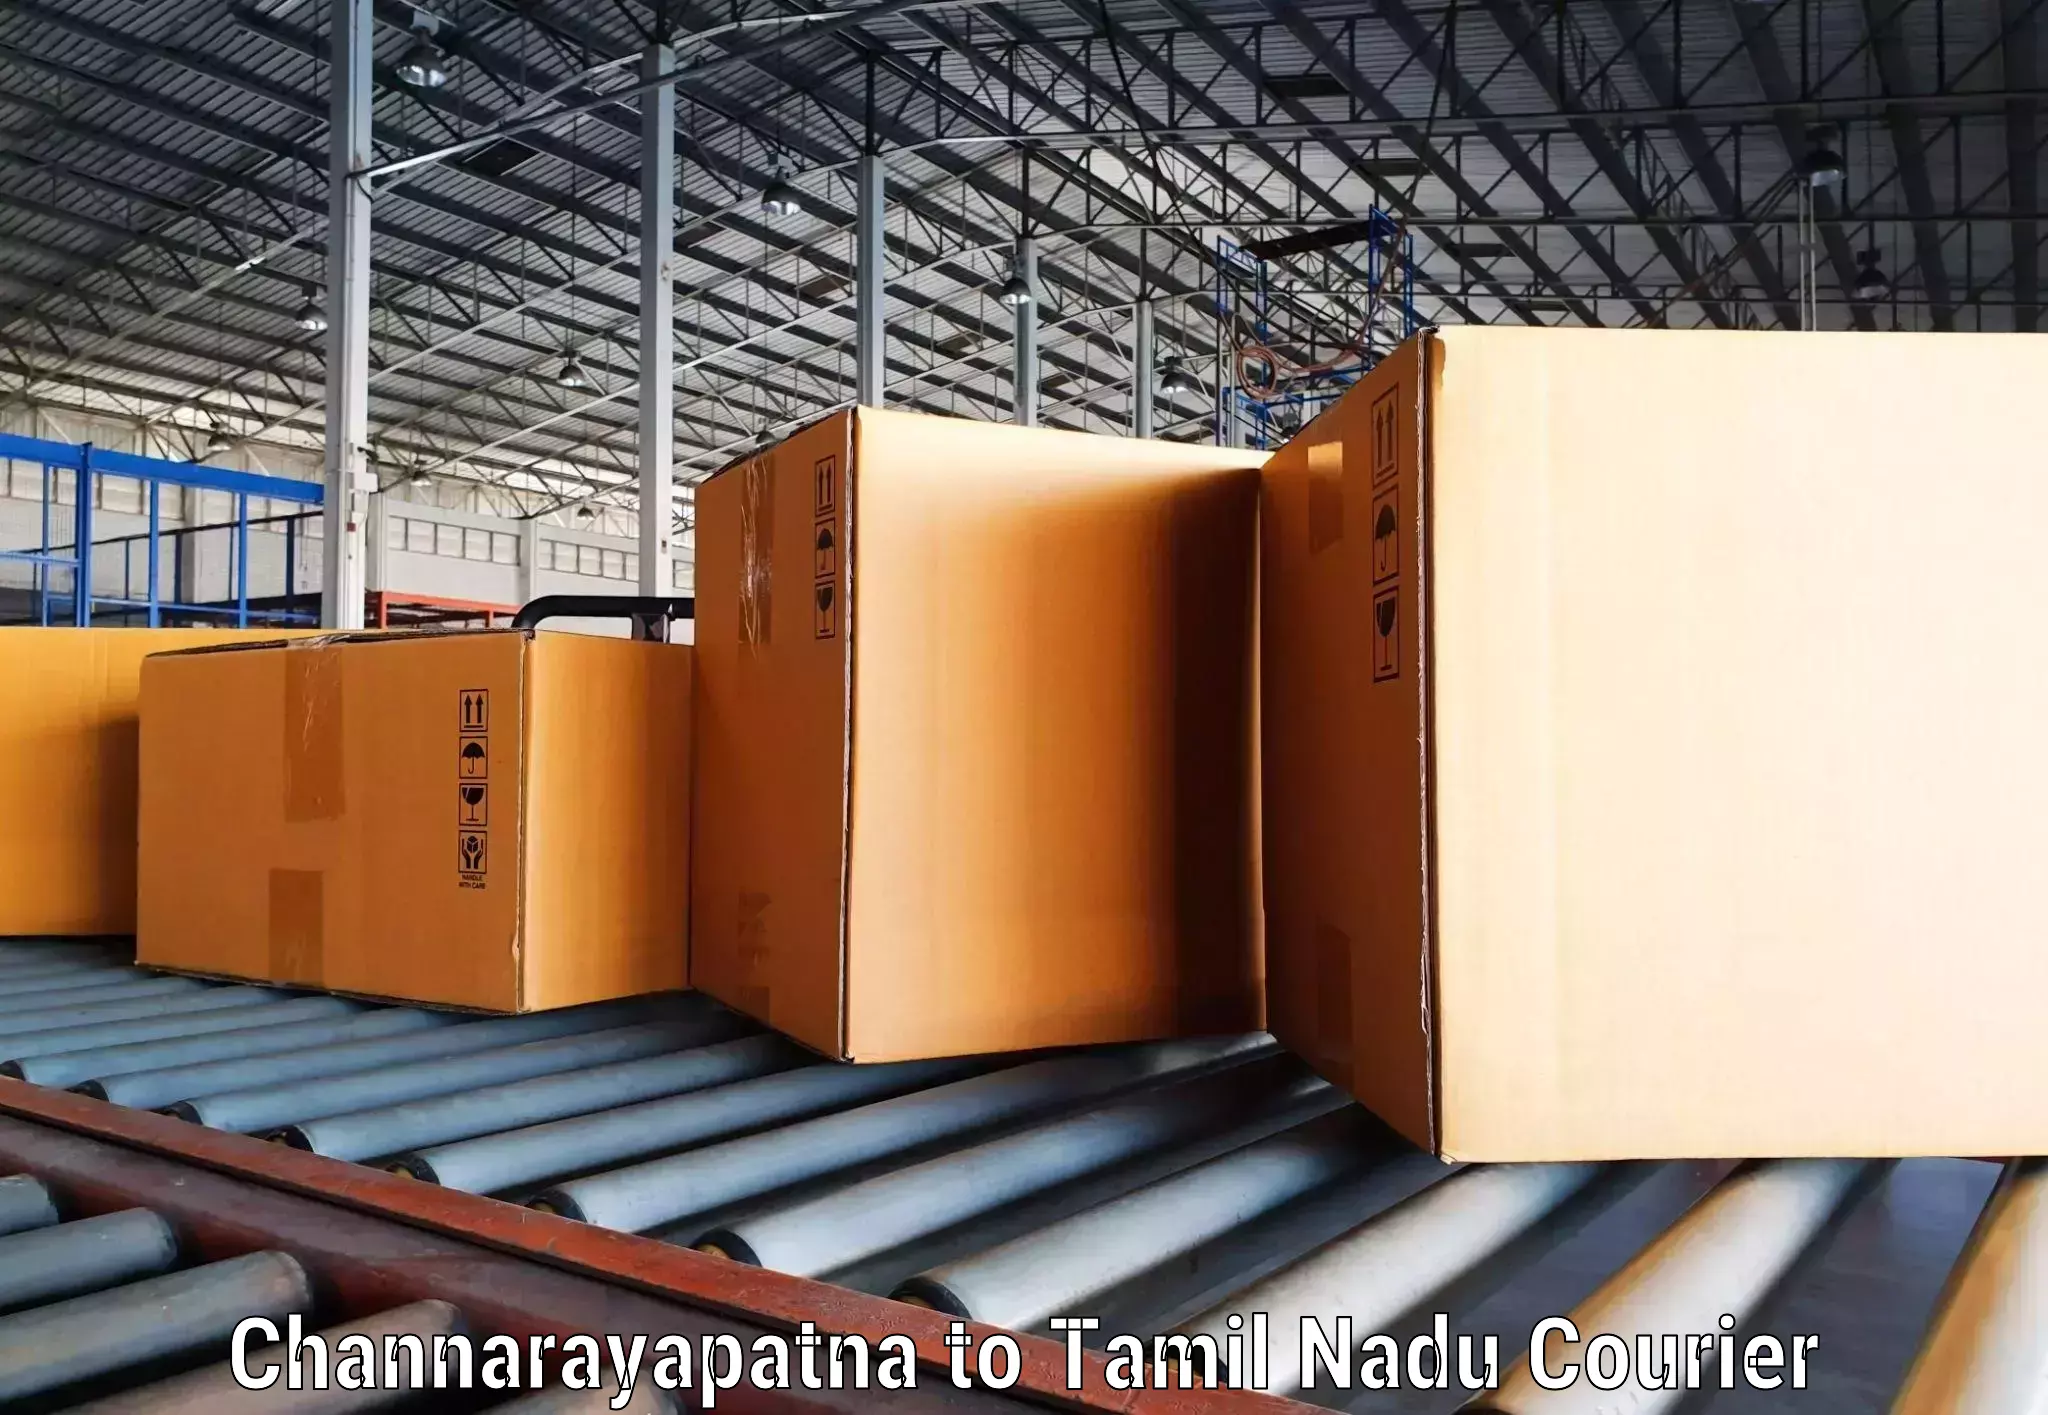 Courier service partnerships Channarayapatna to Rameswaram